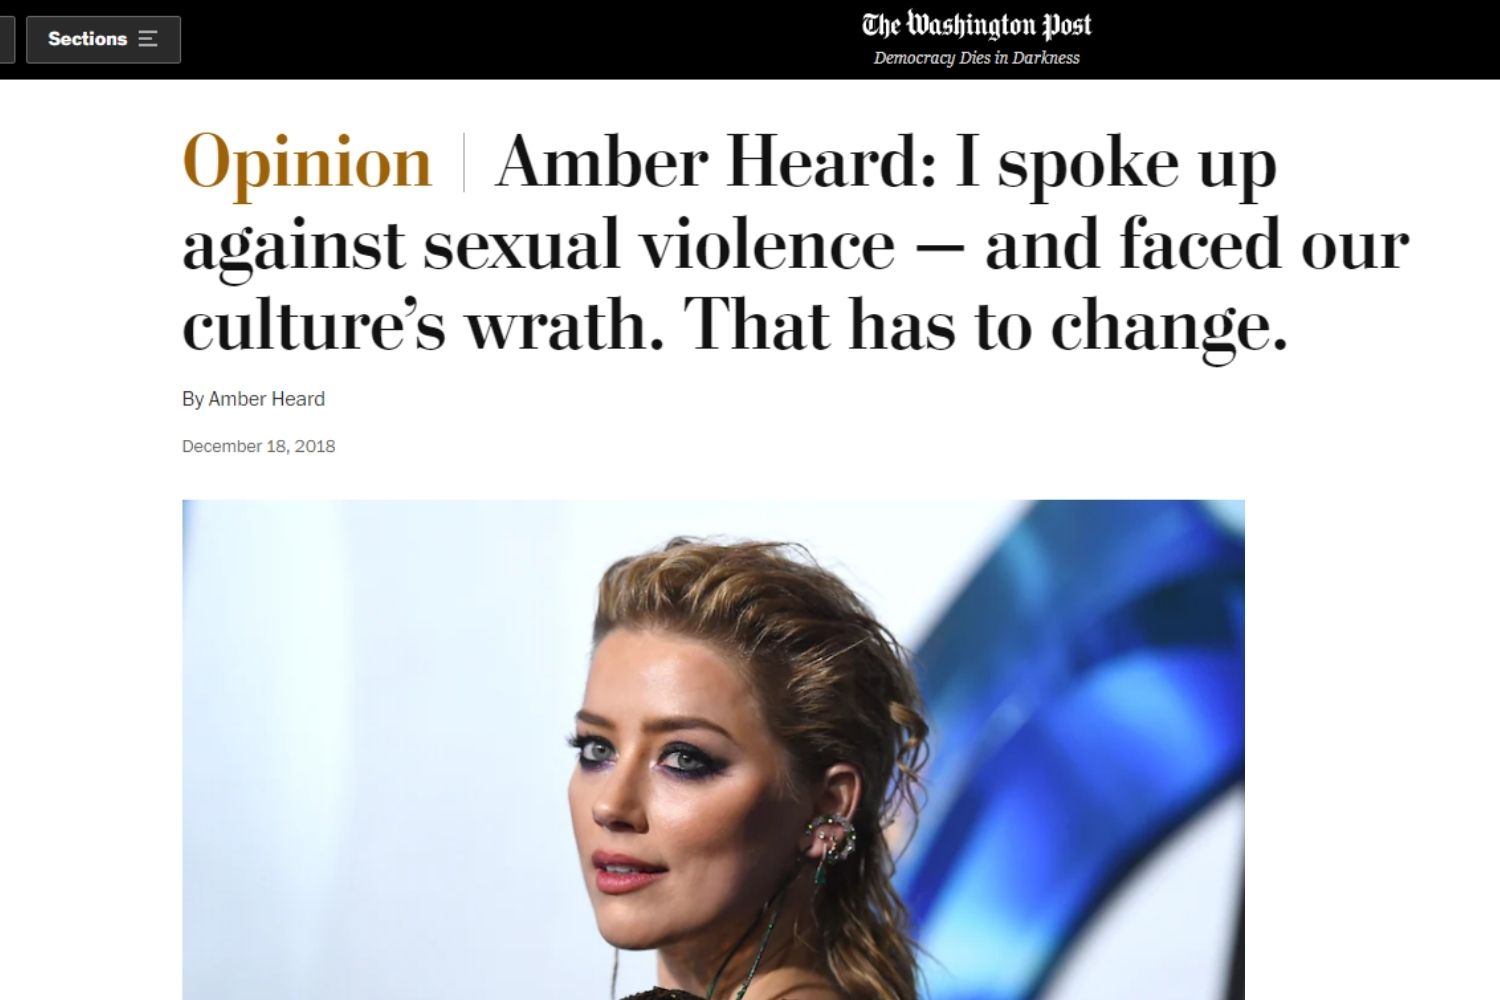 Artigo de Amber Heard para o jornal The Washington Post